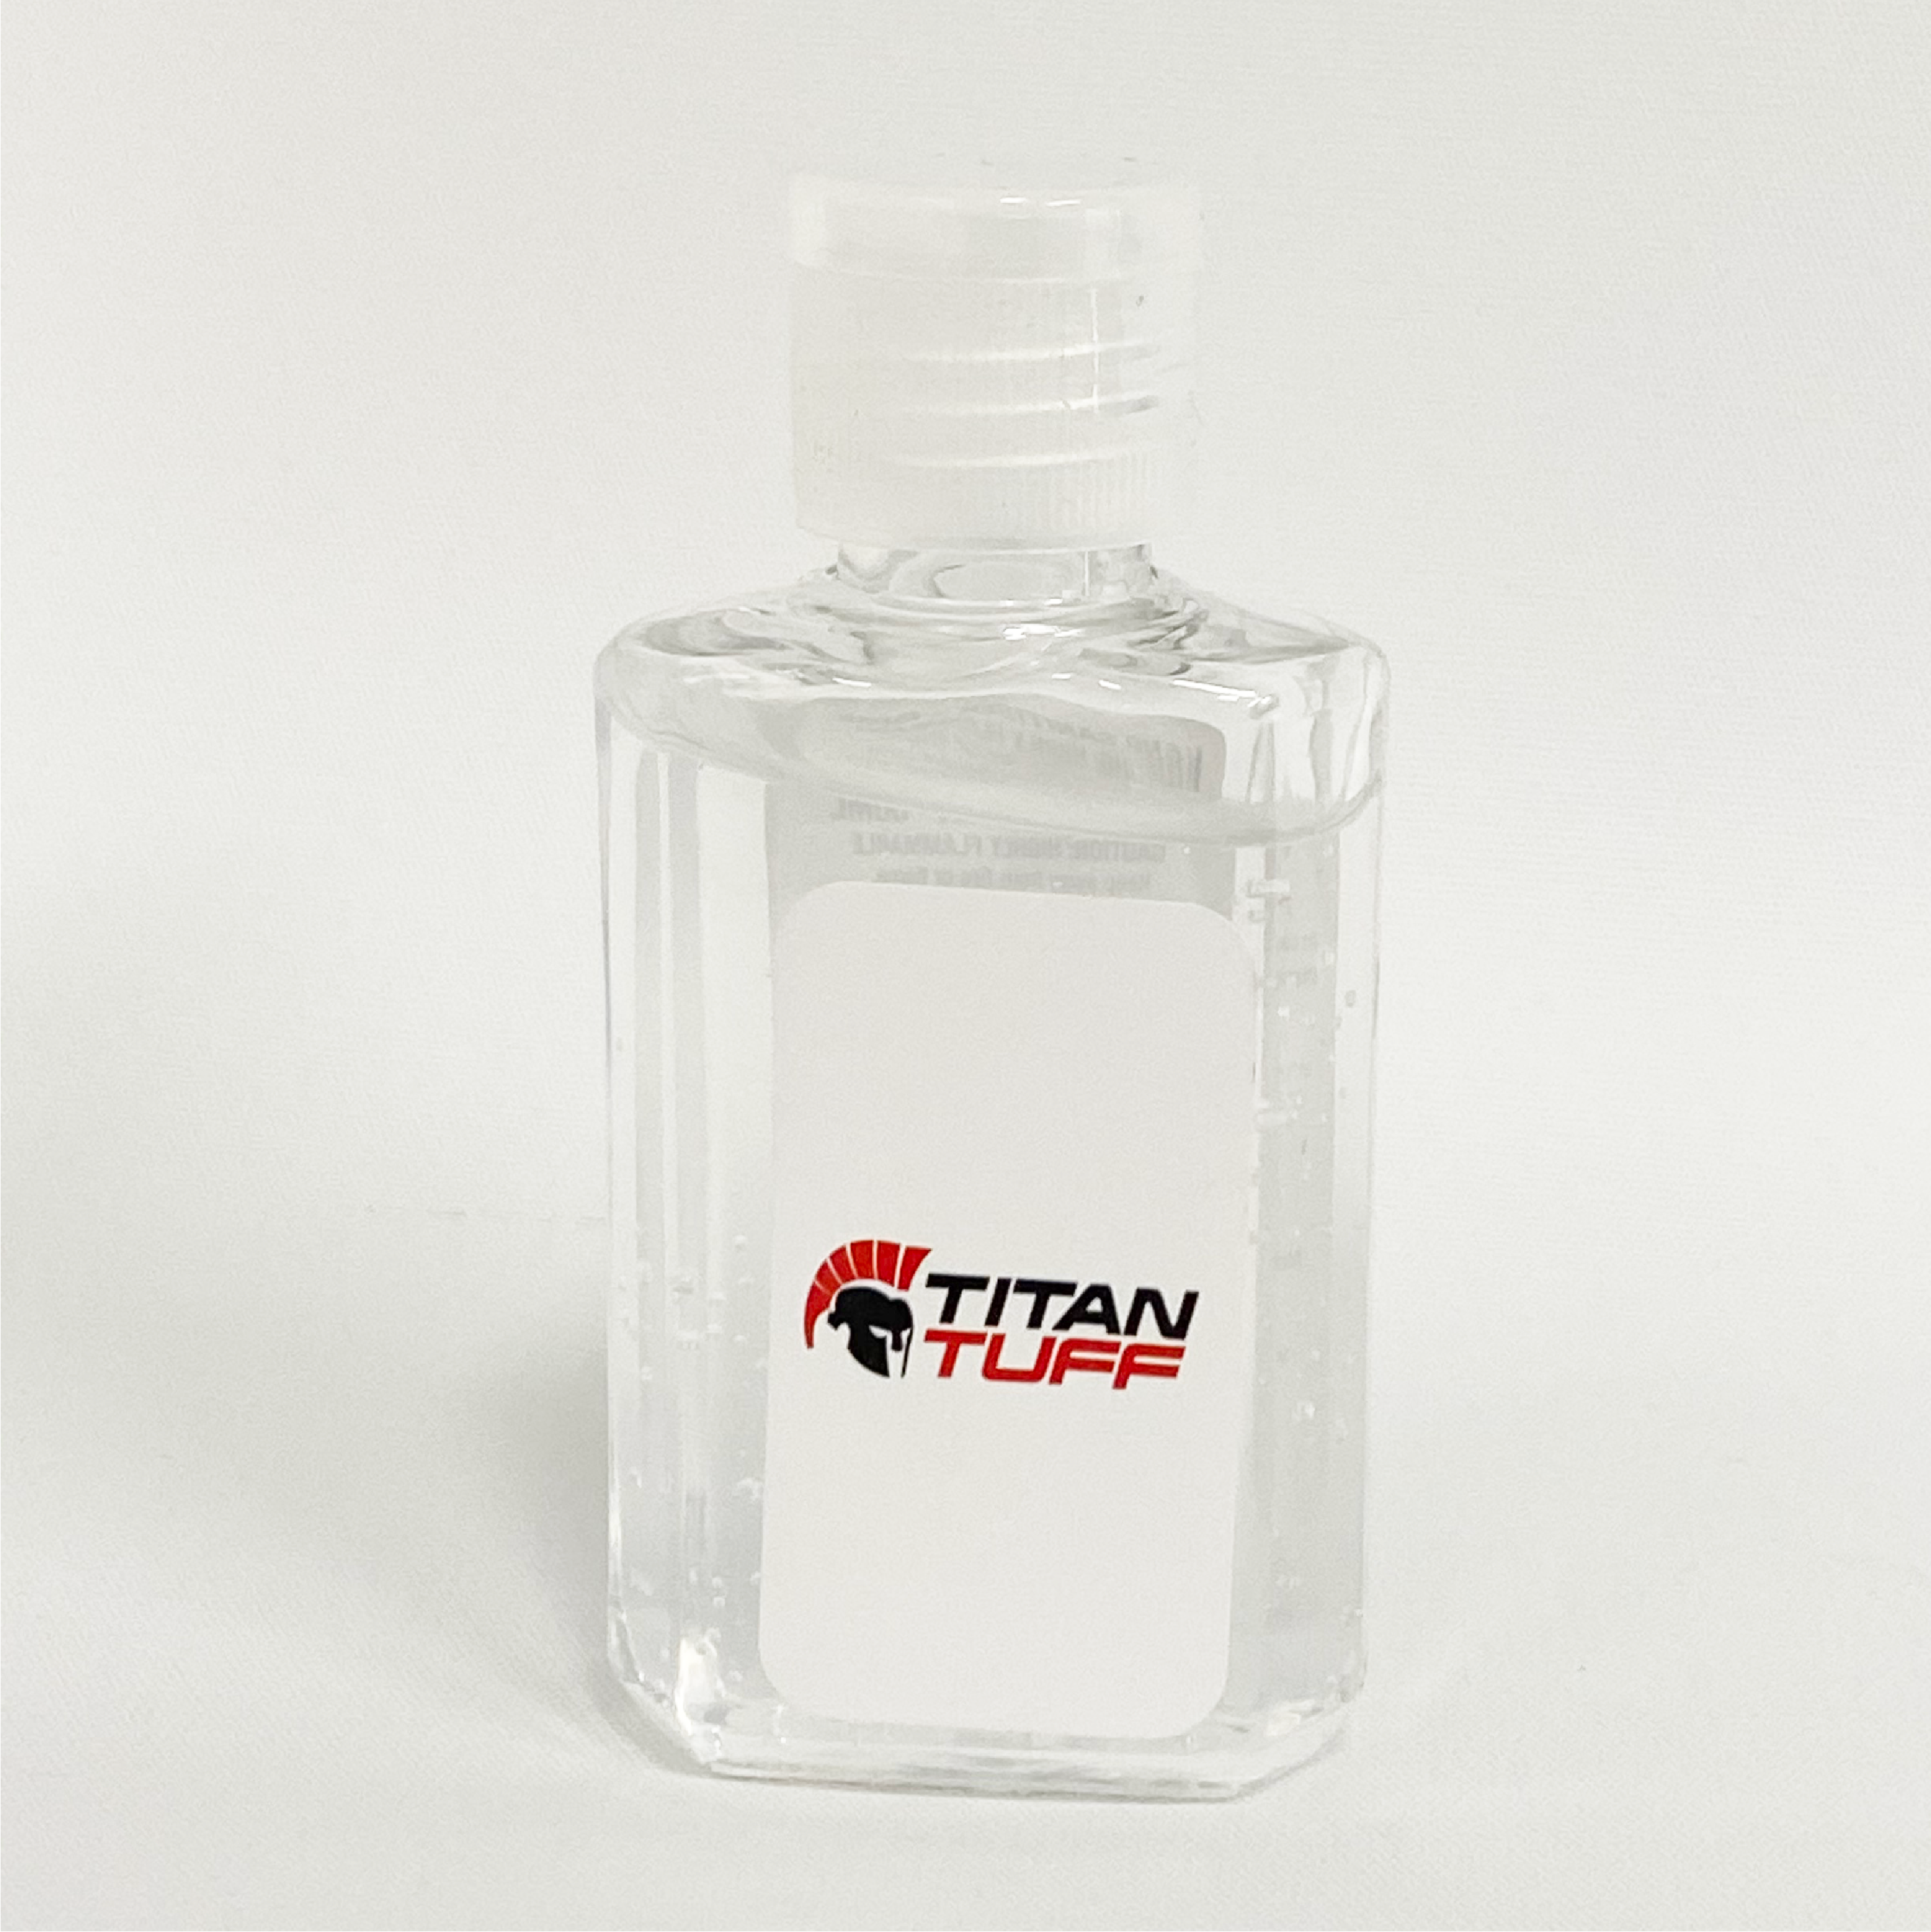 Titan Tuff Hand Sanitiser Gel – 60ml